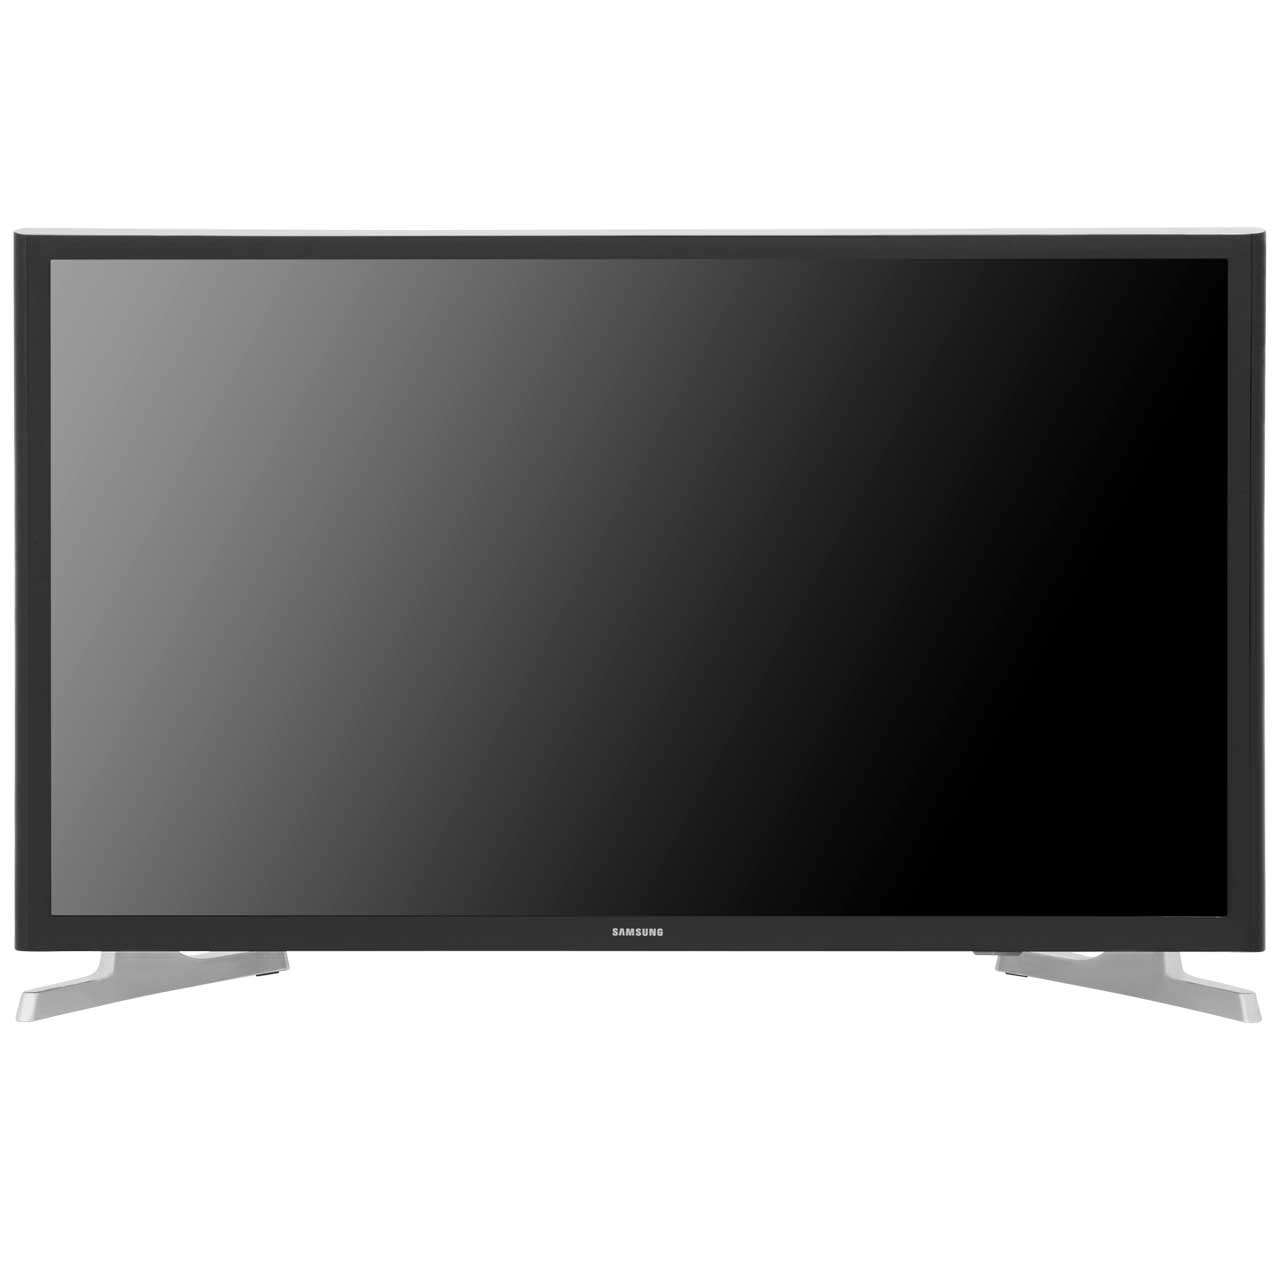 Samsung 32 inch led tv user guide